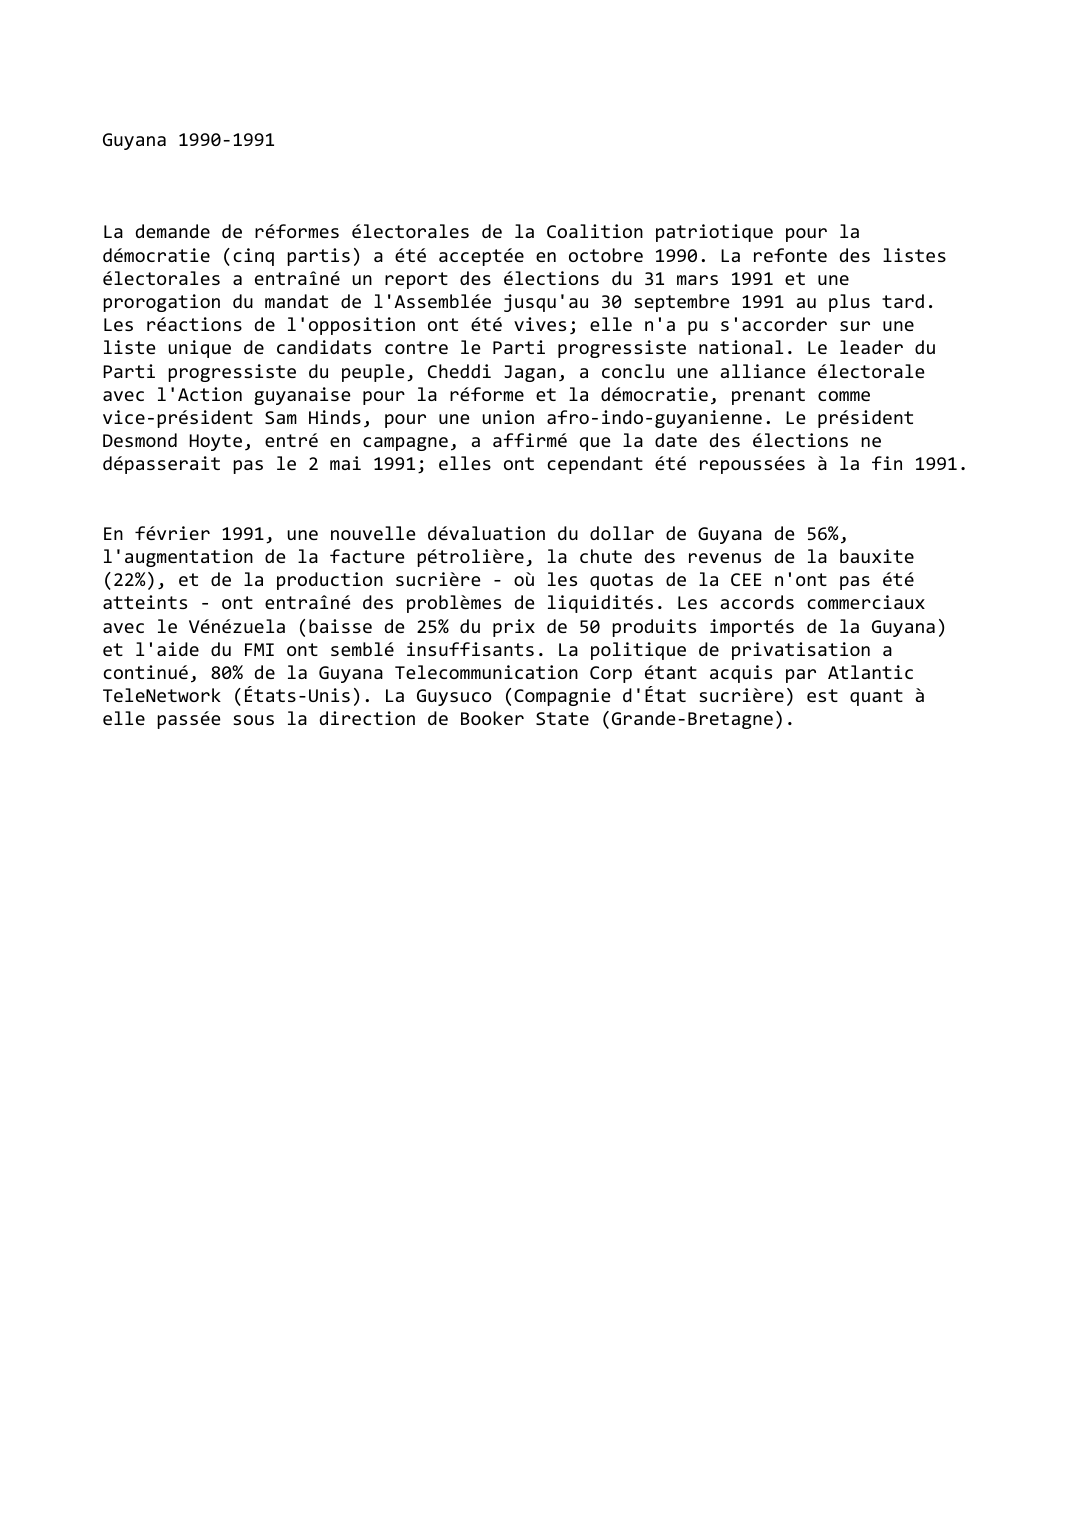 Prévisualisation du document Guyana (1990-1991)